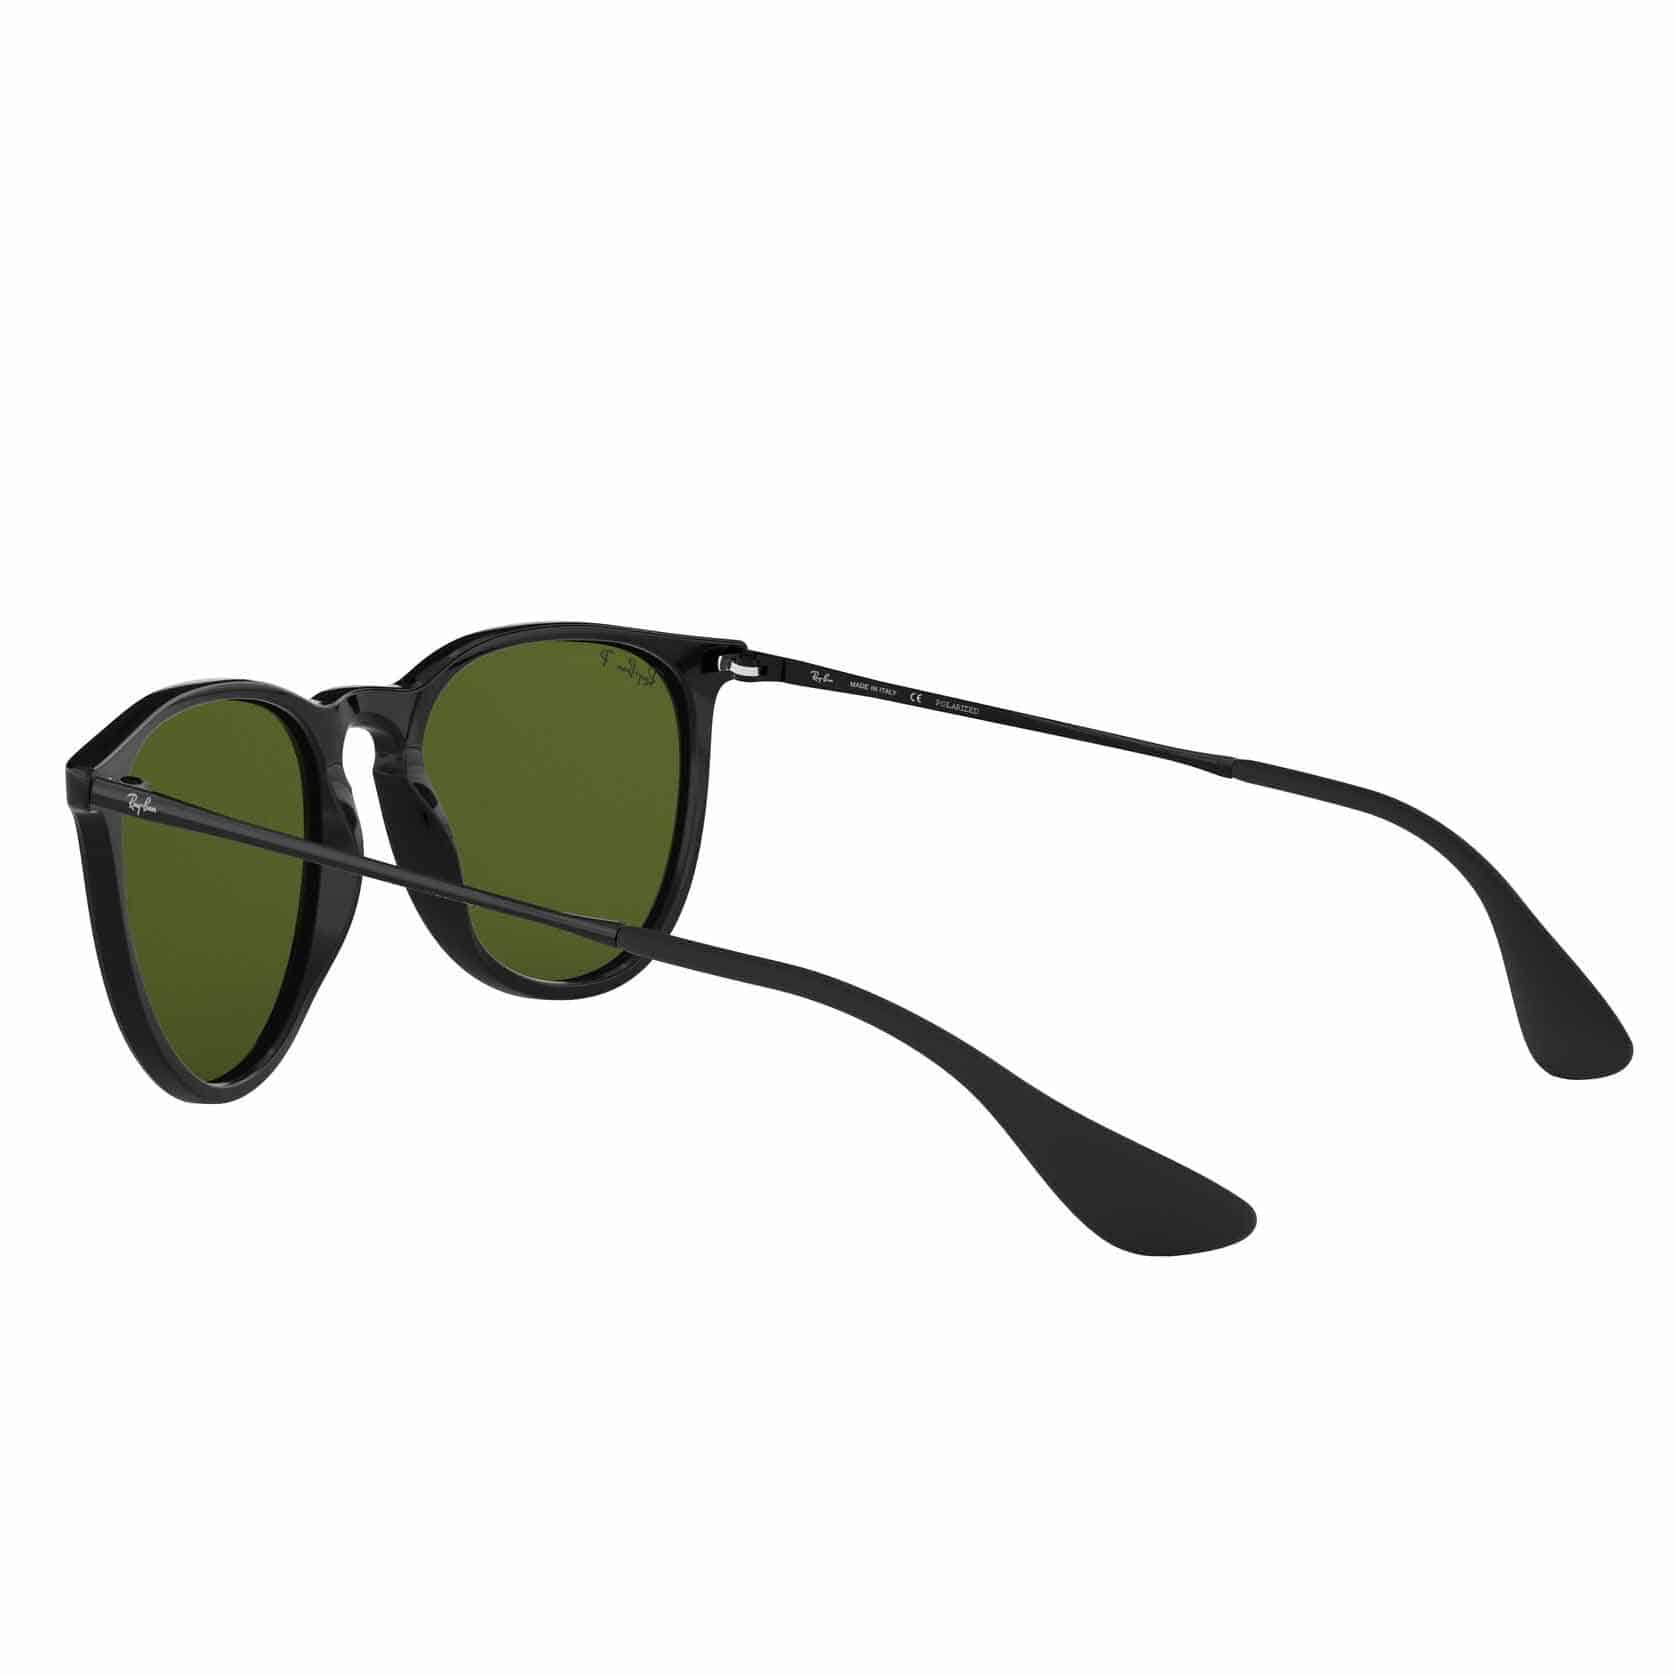 Co Ray-Ban TOX Sunglasses ERIKA RB4171F 601/2P 54 BLACK/GREEN